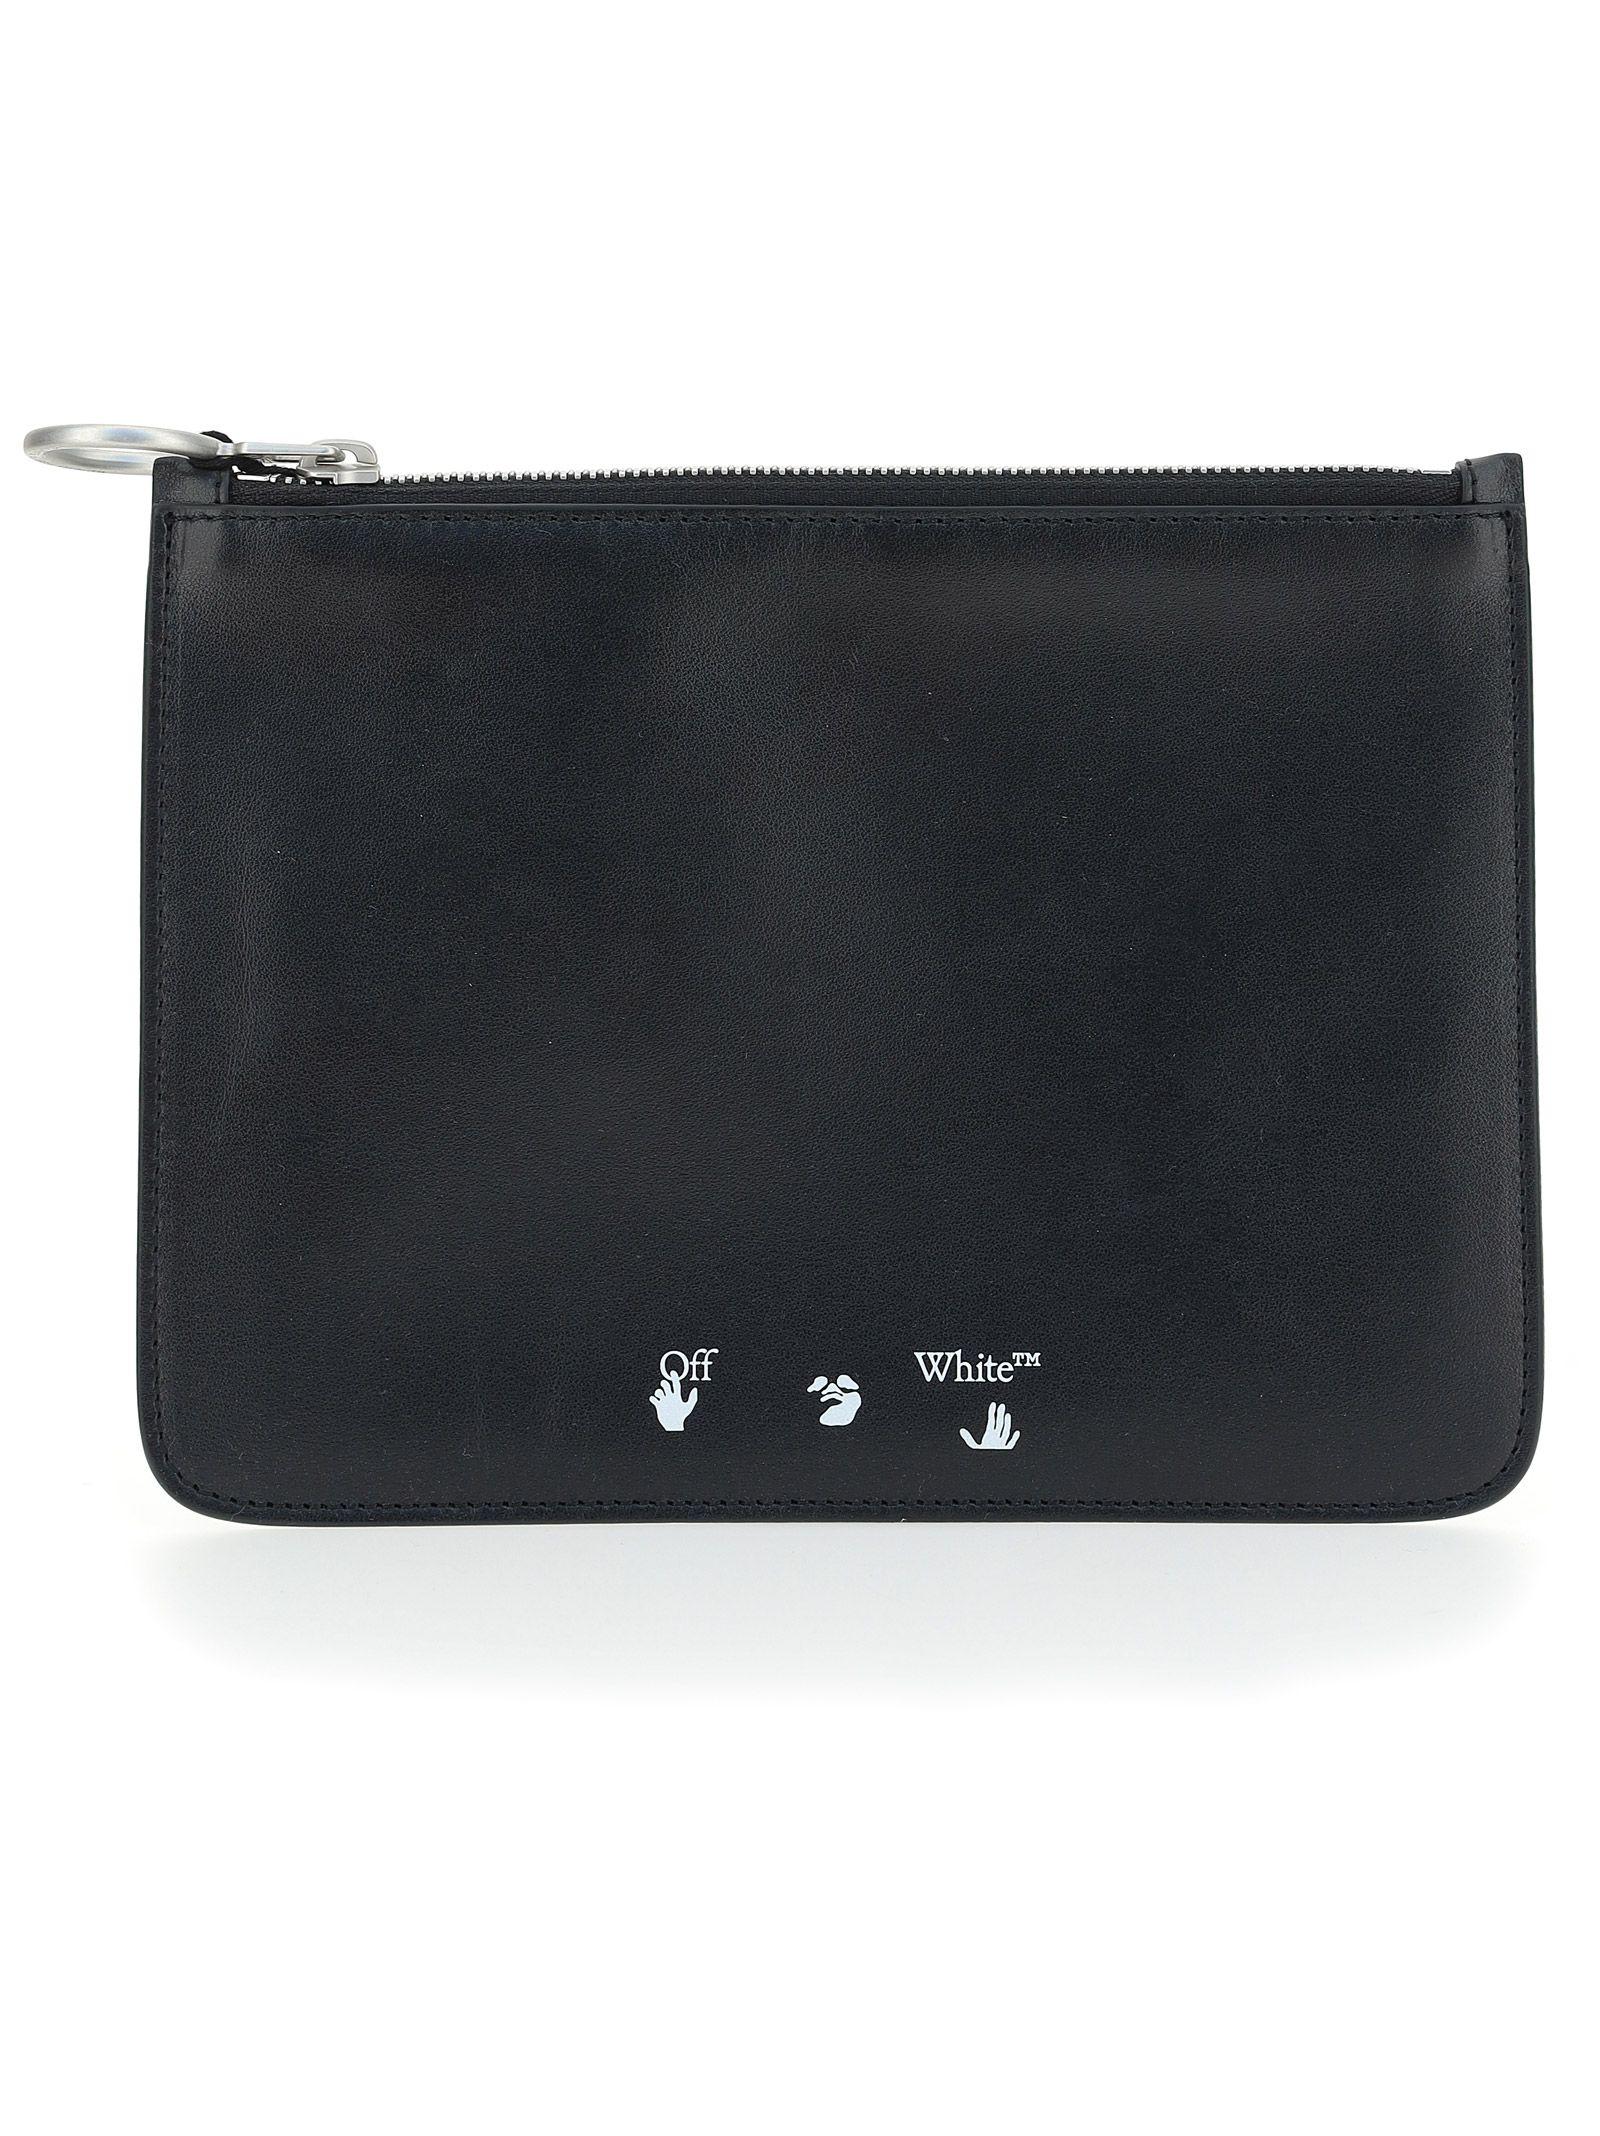 Off-White c/o Virgil Abloh Leather Wallet in Black for Men - Lyst